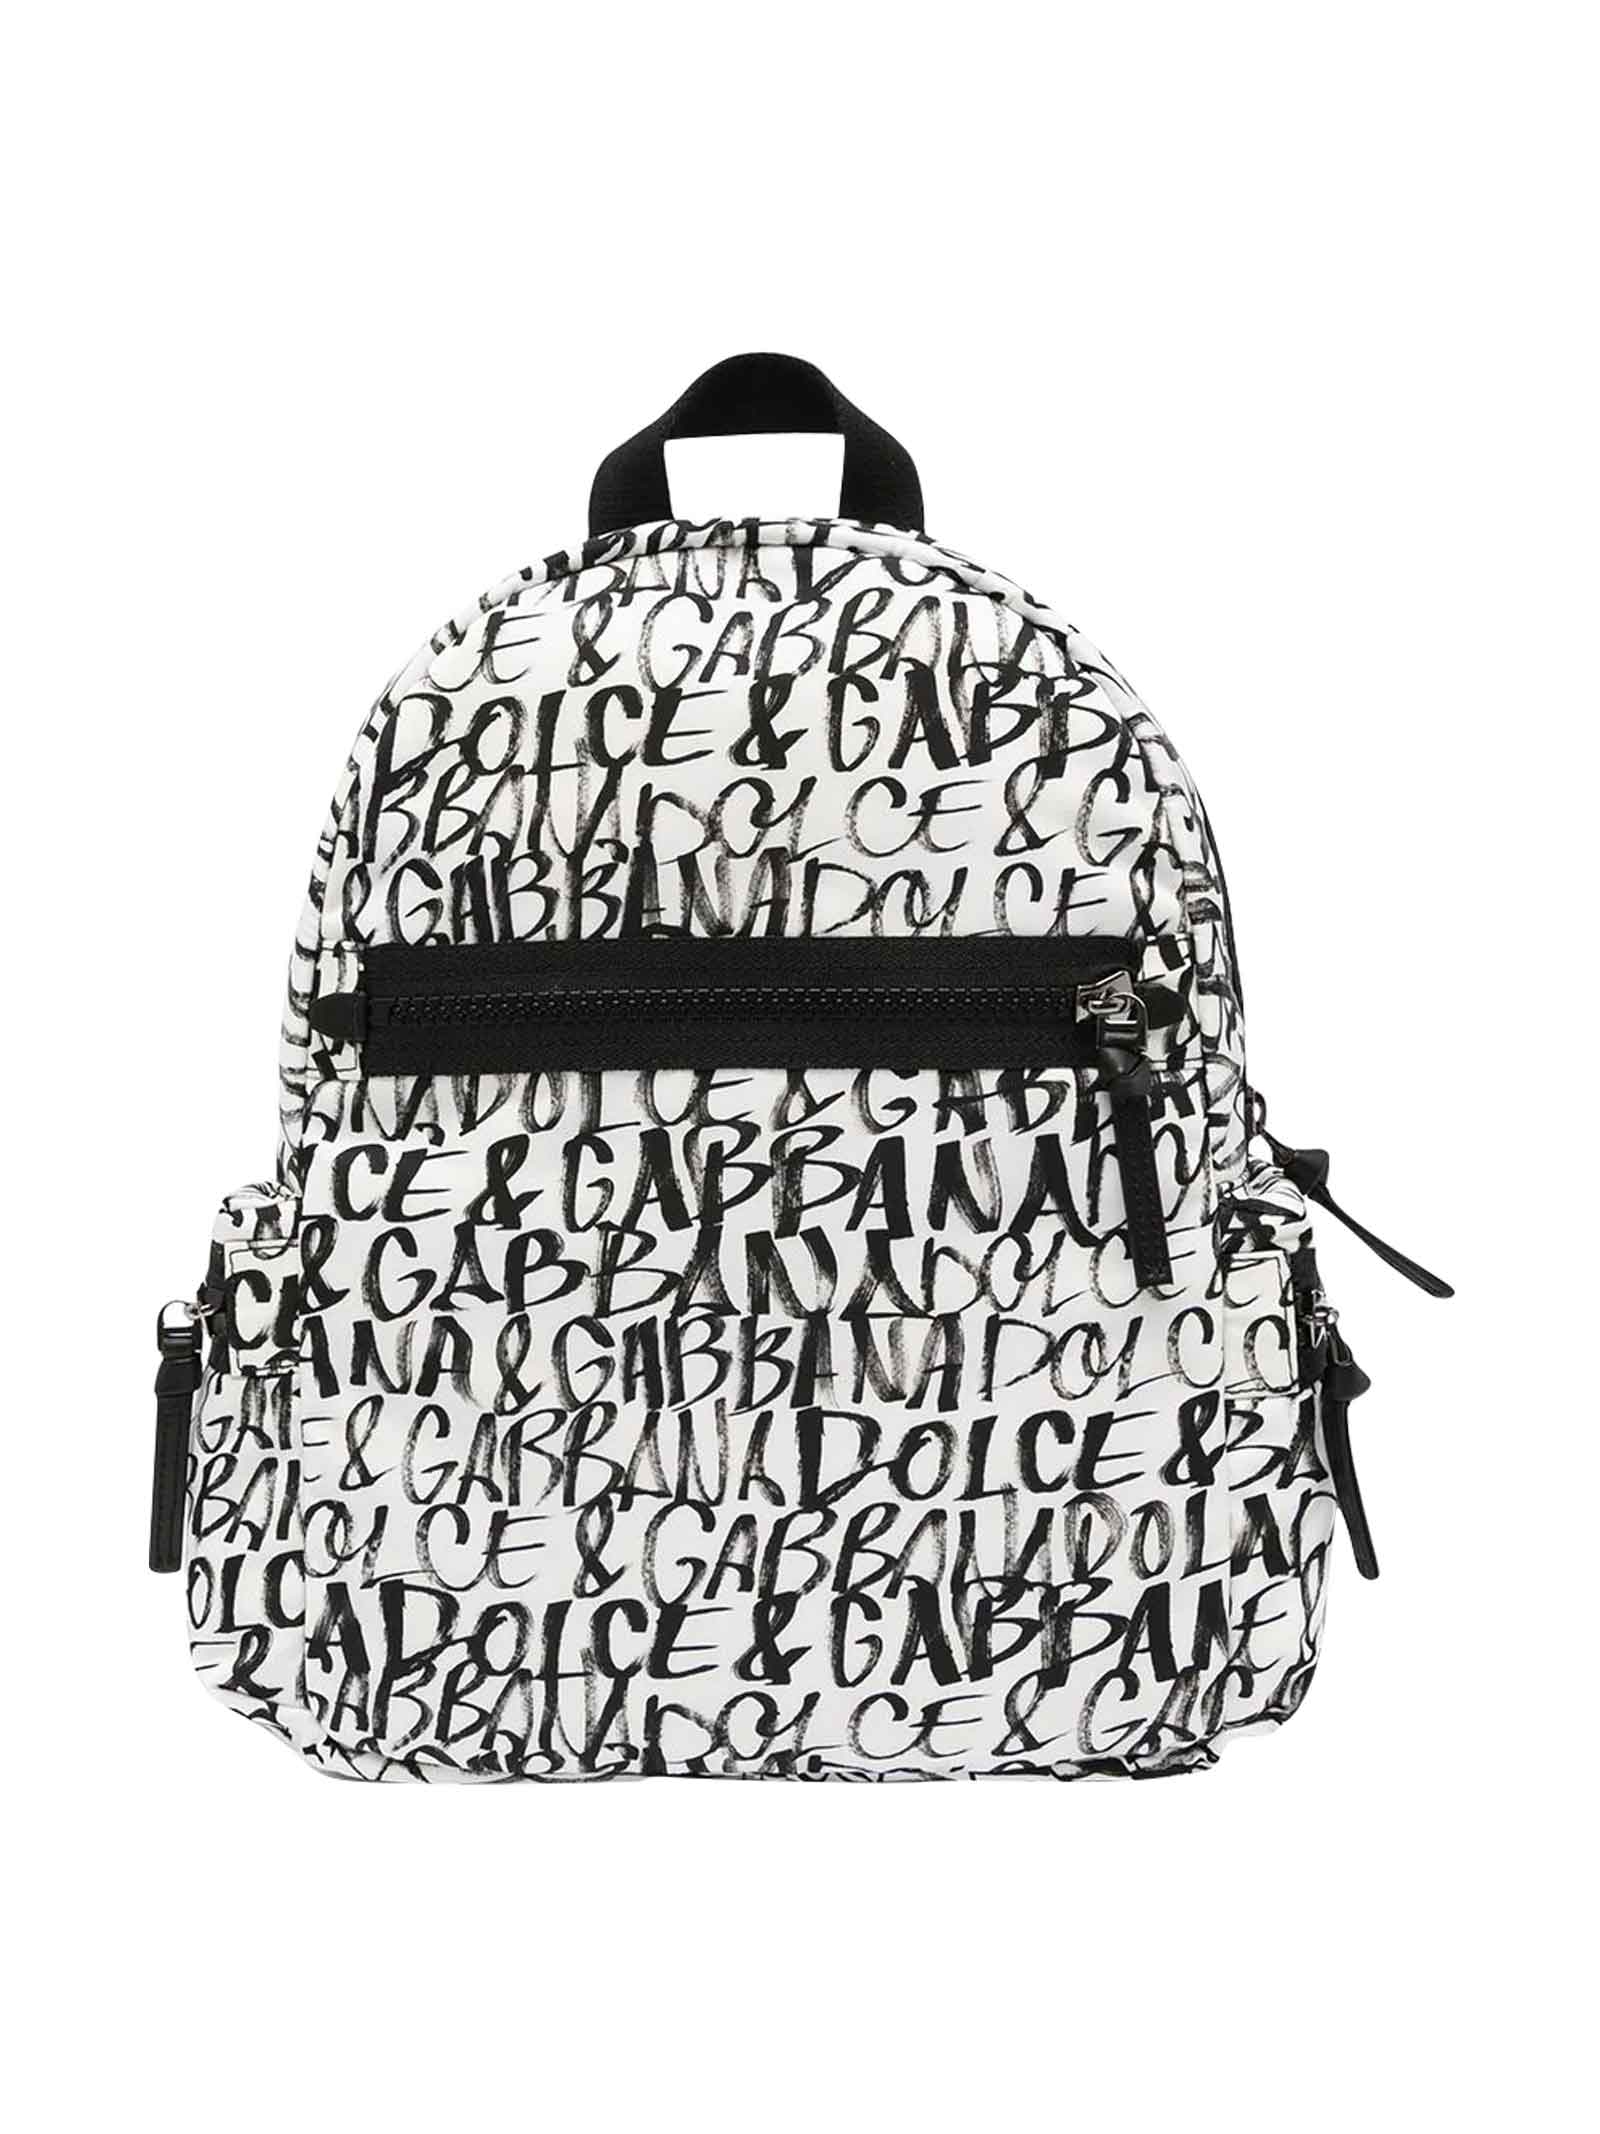 Dolce & Gabbana Black And White Backpack